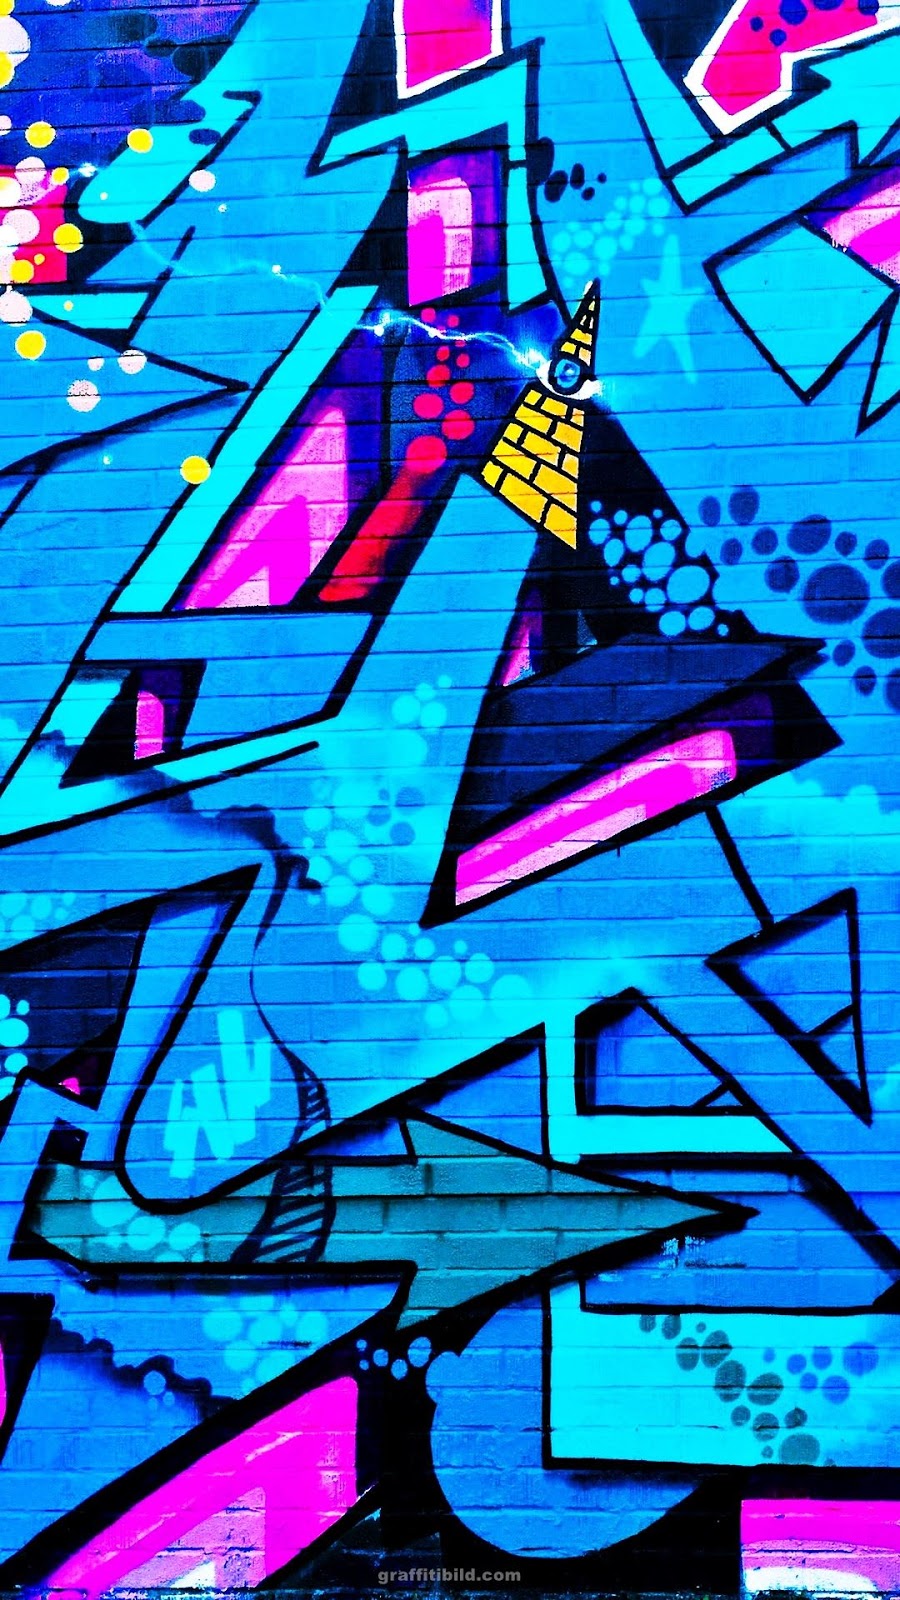 Graffiti Hintergründe, graffiti wallpaper, hd, mobile, handy, android